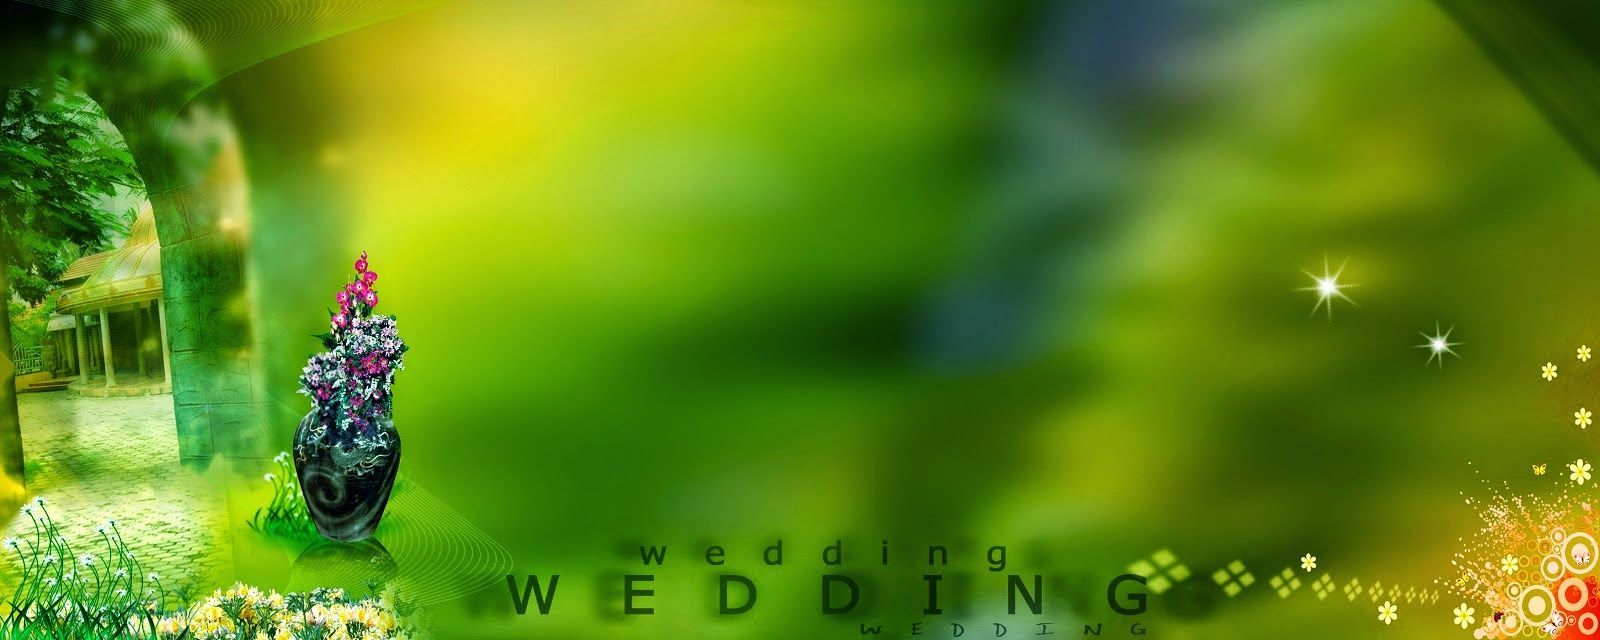 Beautiful Karizma Album Background. Wedding album layout, Wedding album , Wedding photography album design